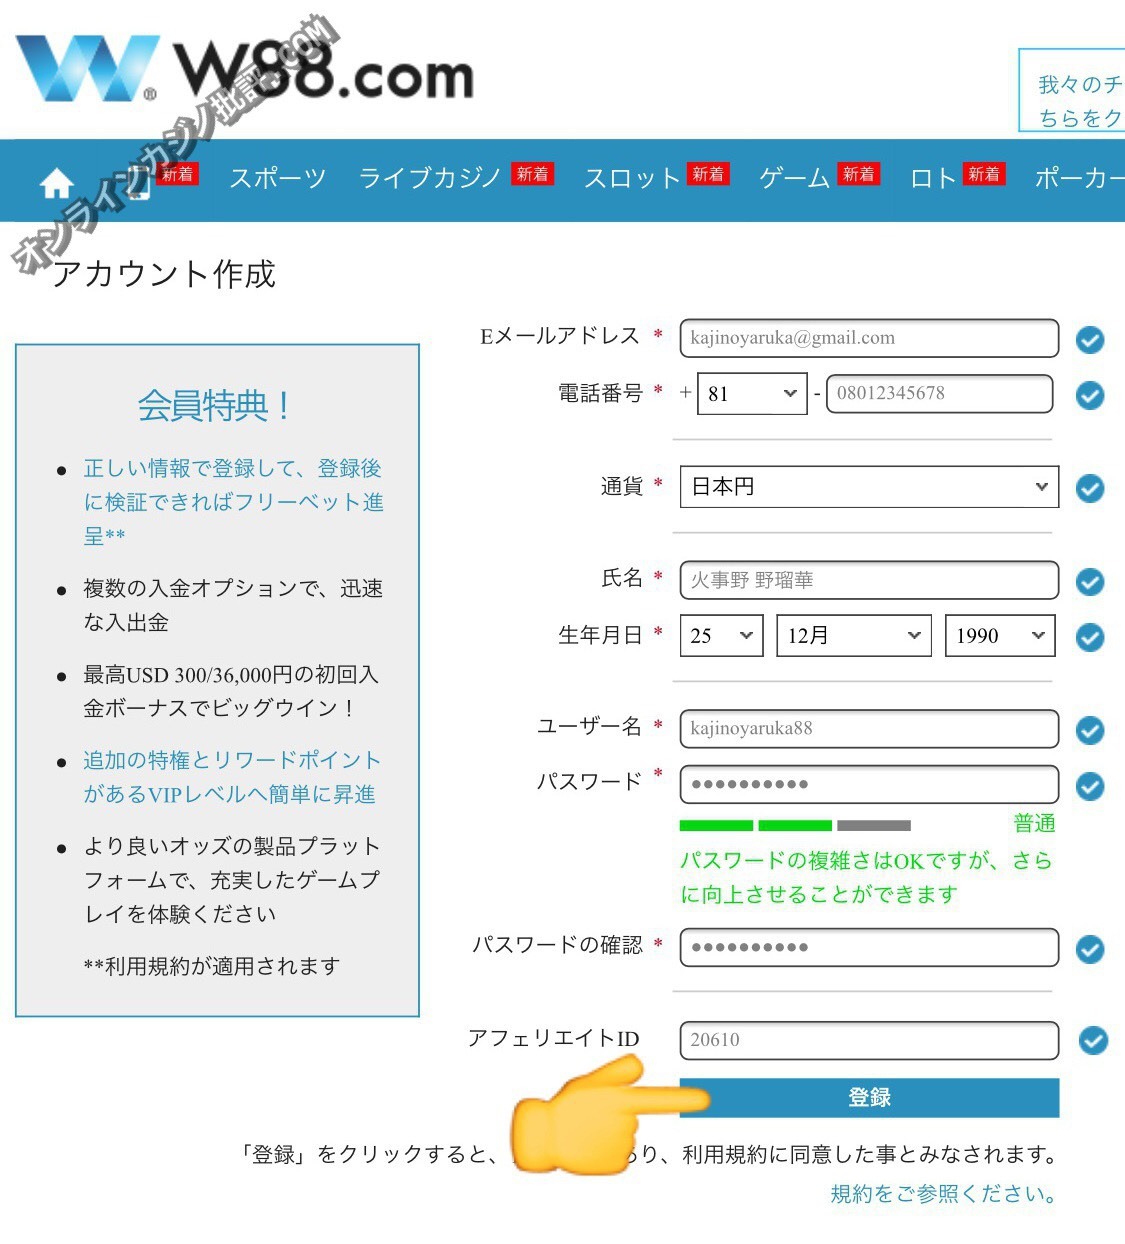 W88.comCASINO新規登録画面の写真